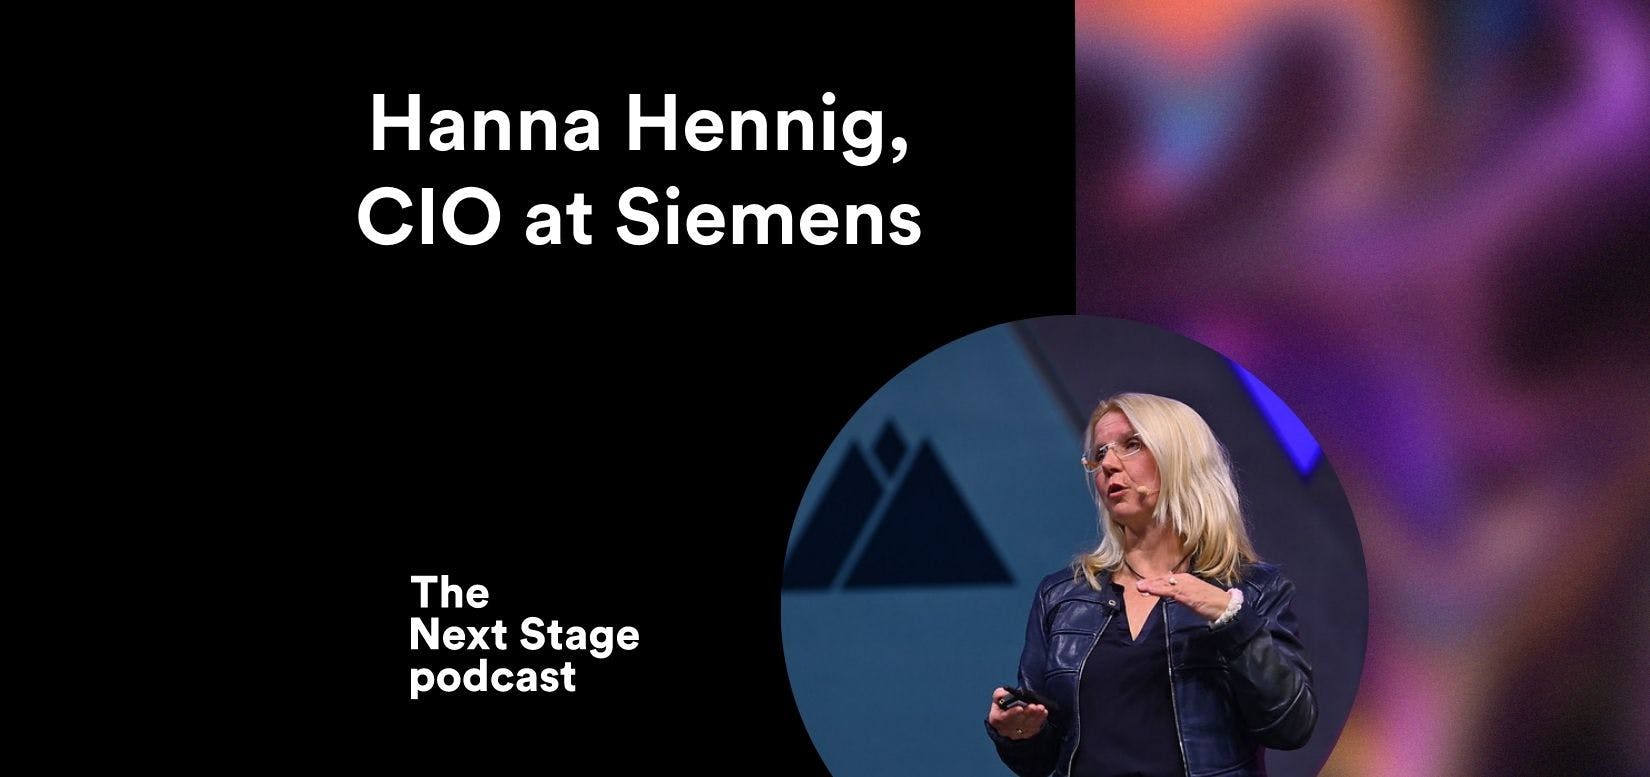 Siemens CIO Hanna Hennig giving a talk on stage at Web Summit 2021